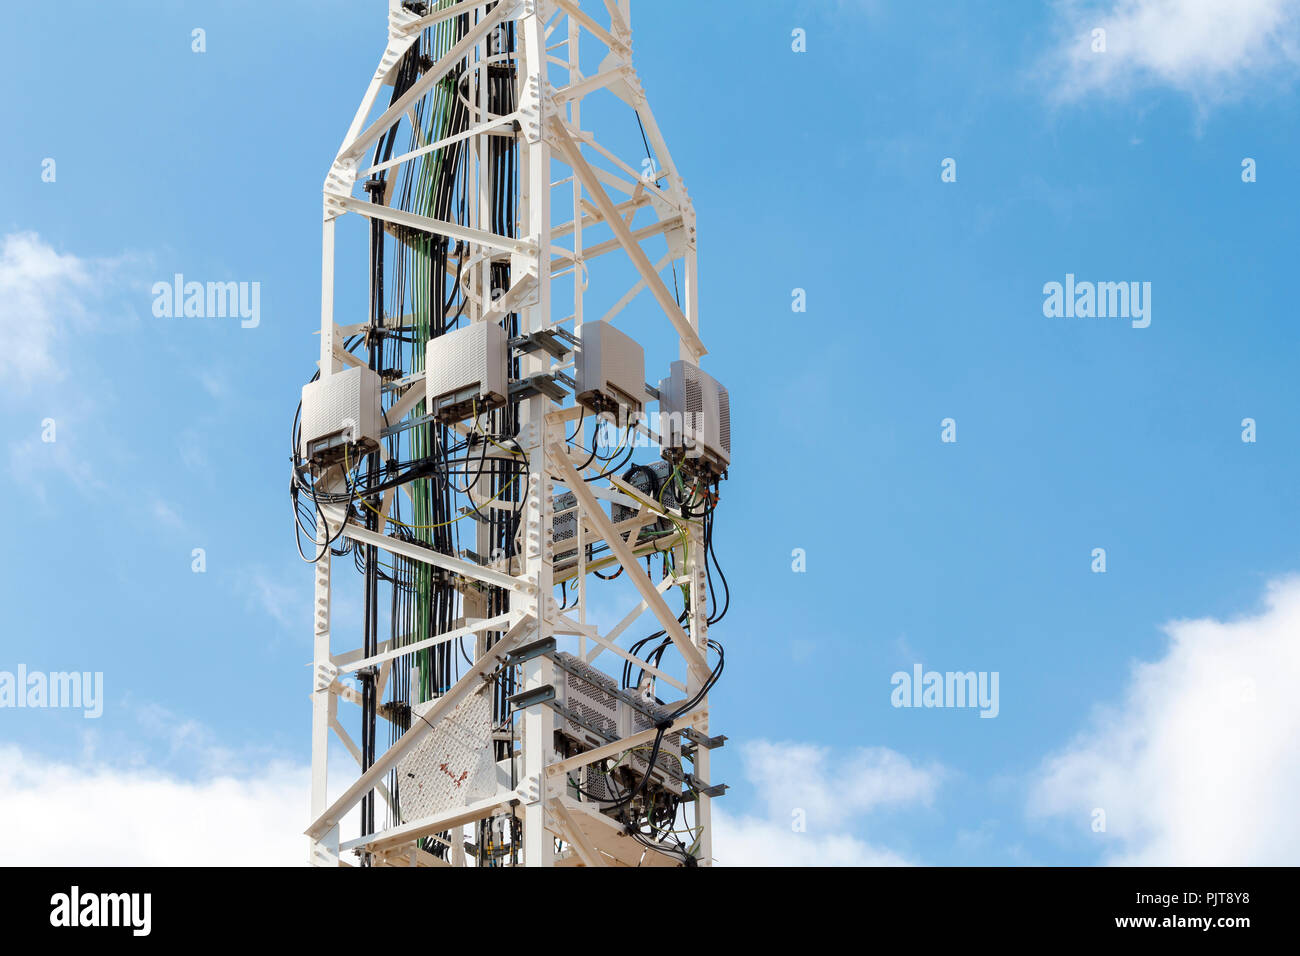 Telekommunikation Turm gegen den blauen Himmel. Stockfoto